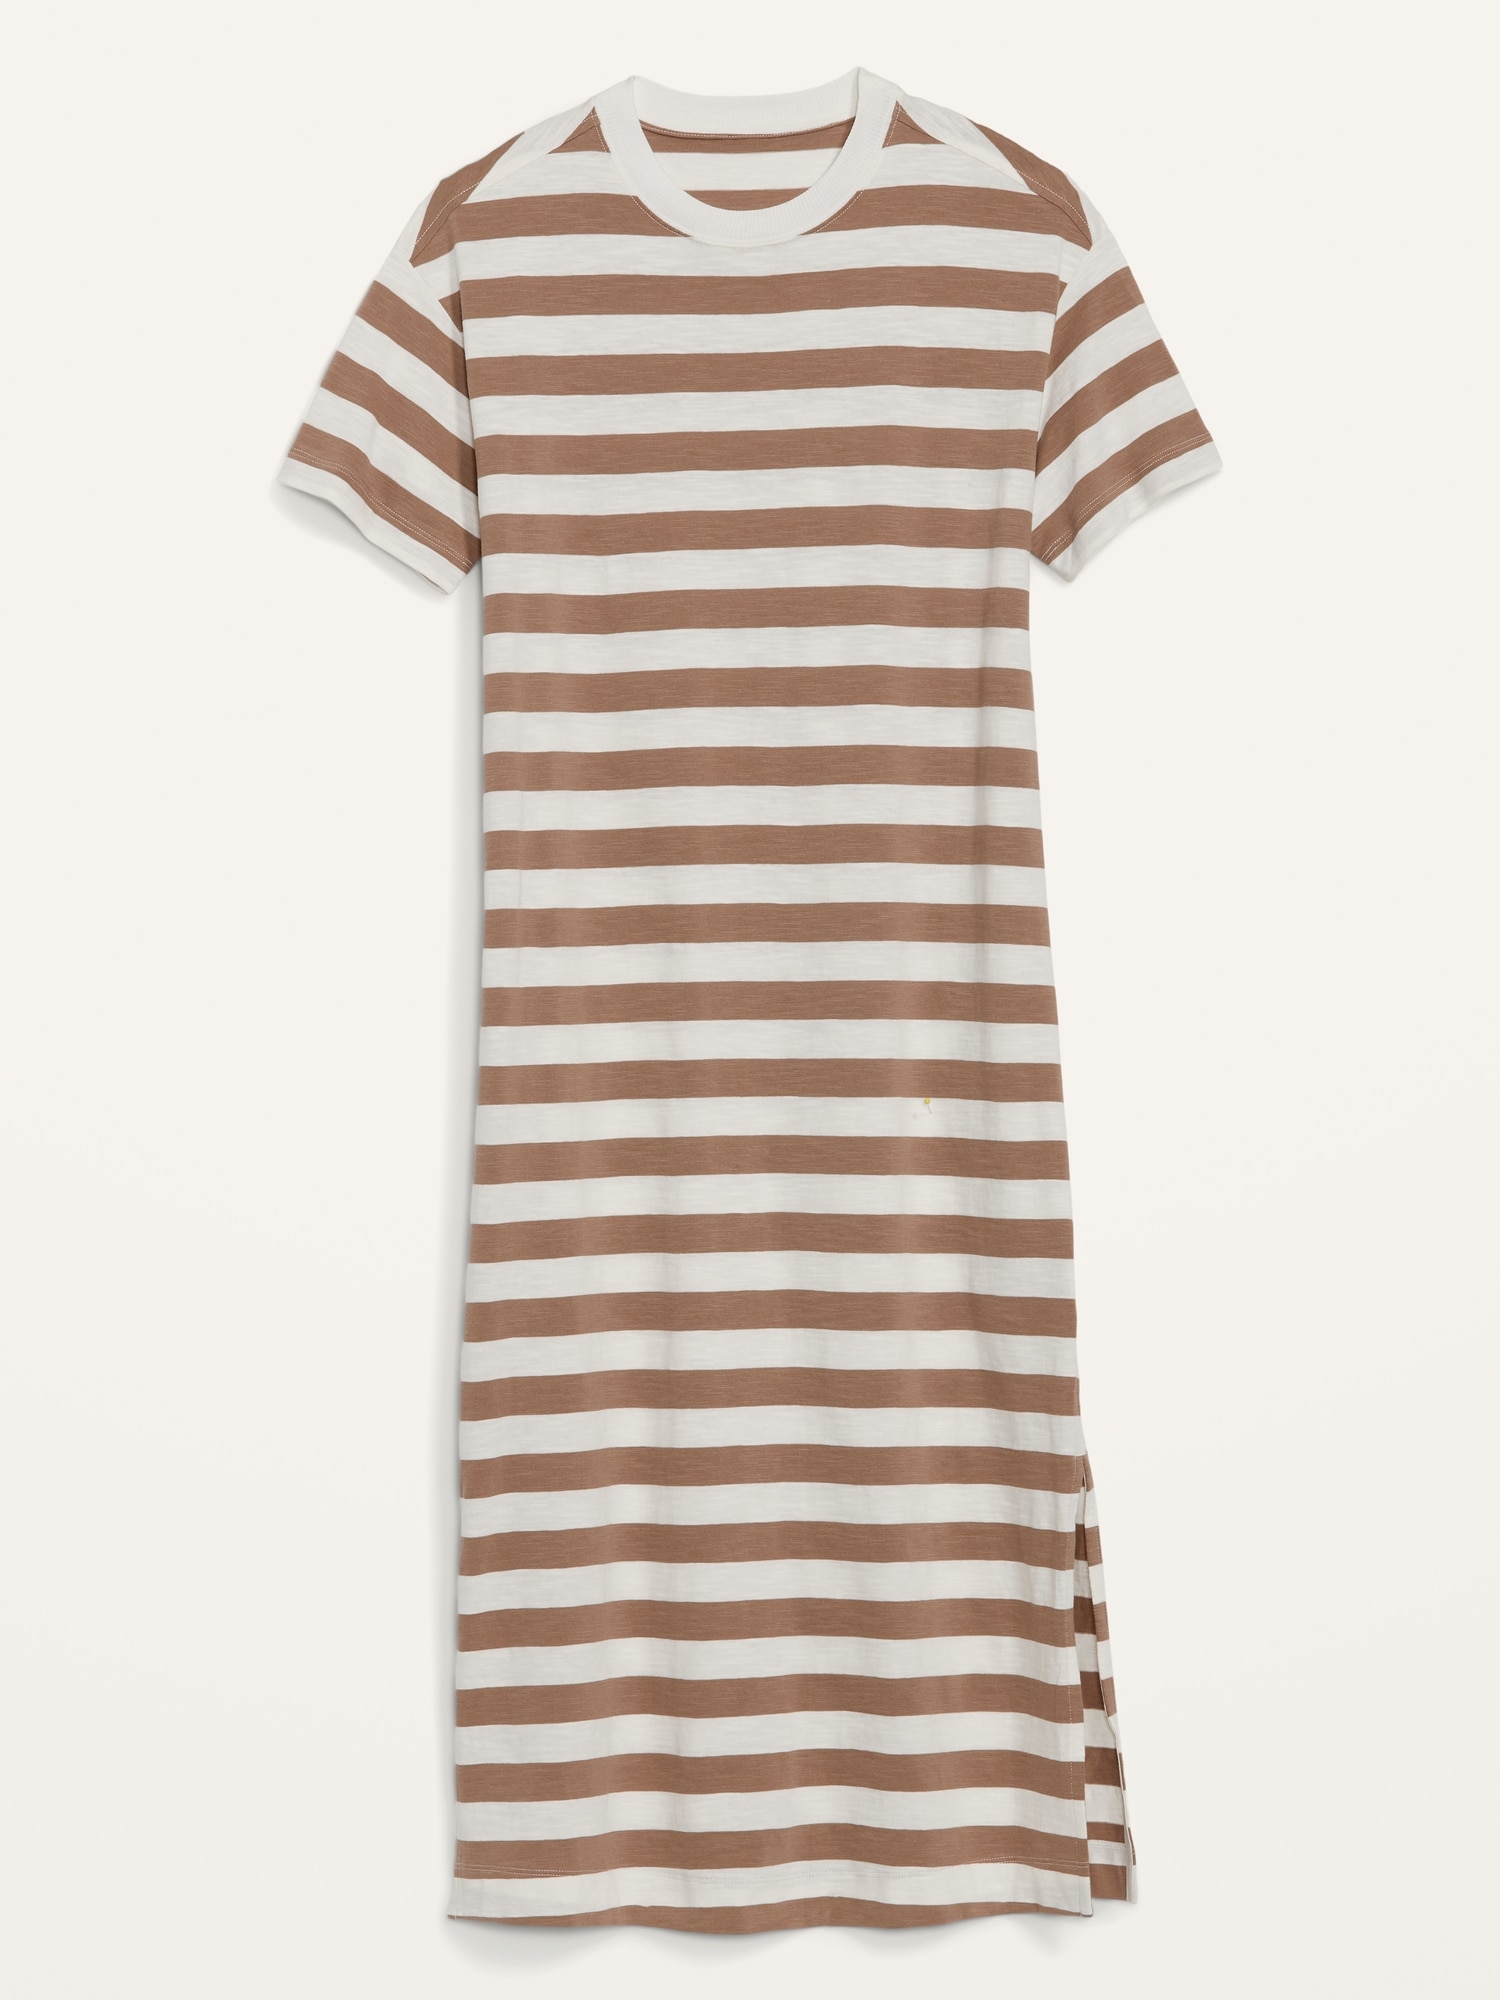 Vintage Striped T-Shirt Midi Shift Dress for Women | Old Navy